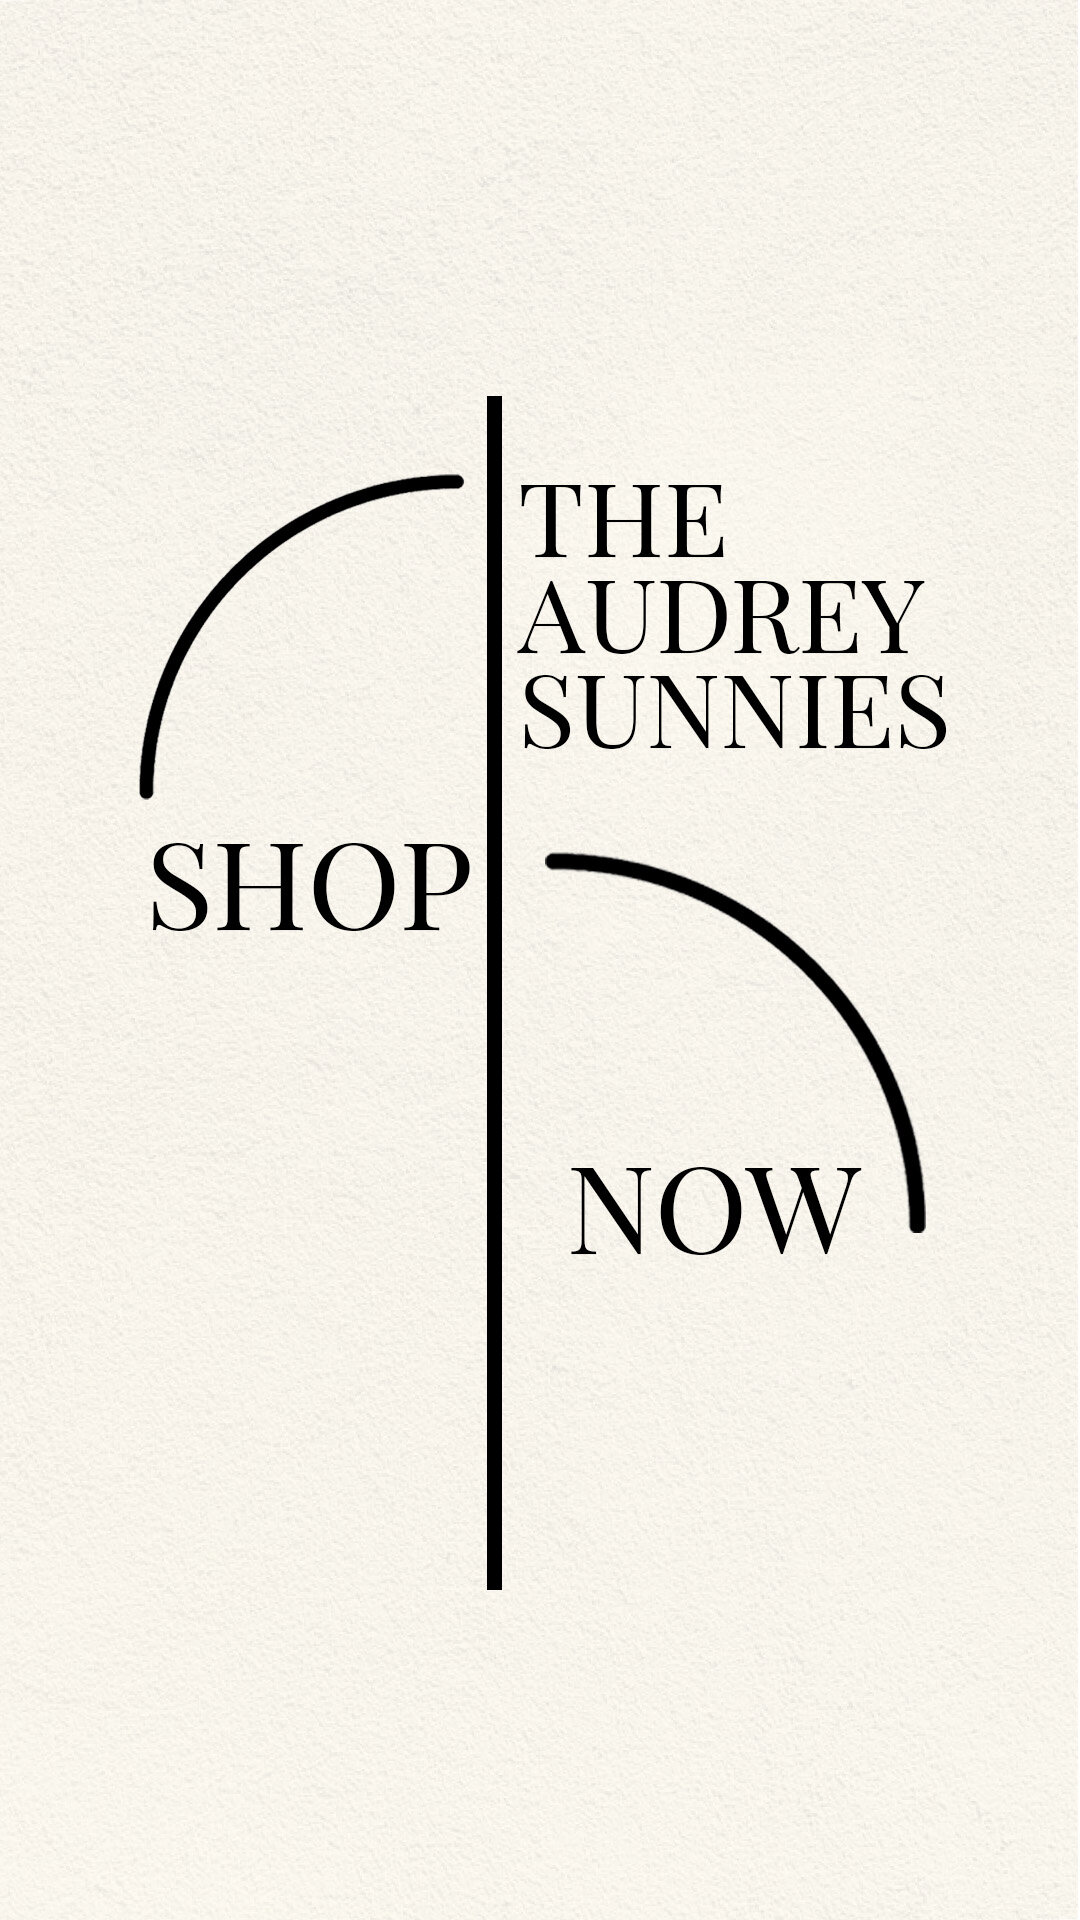 Audrey_IG Story_Shop now.jpg